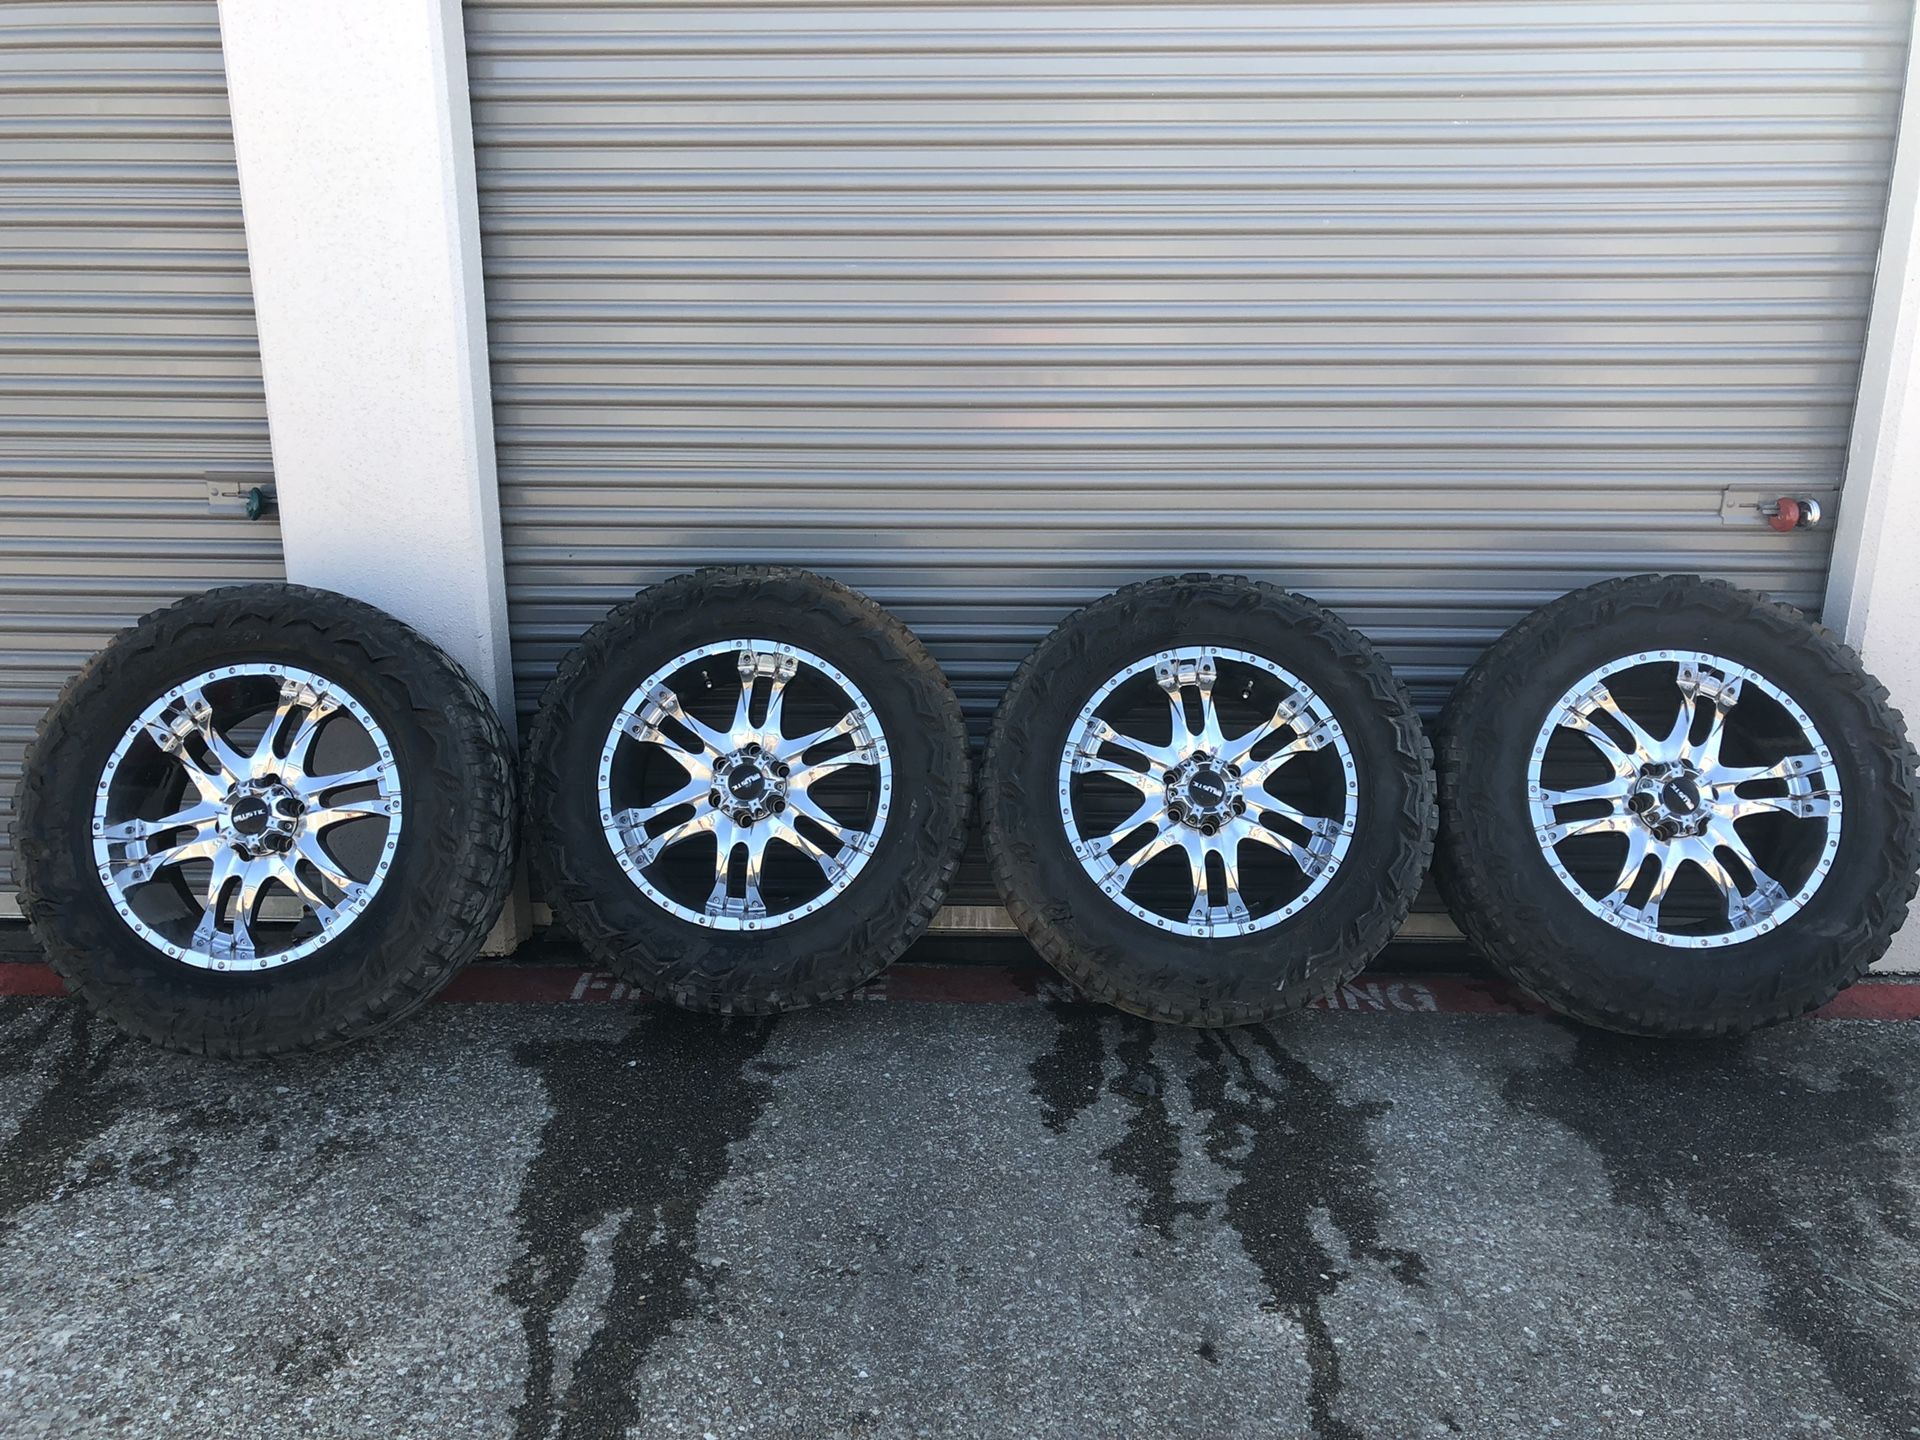 20” Ballistic chrome rims with tires